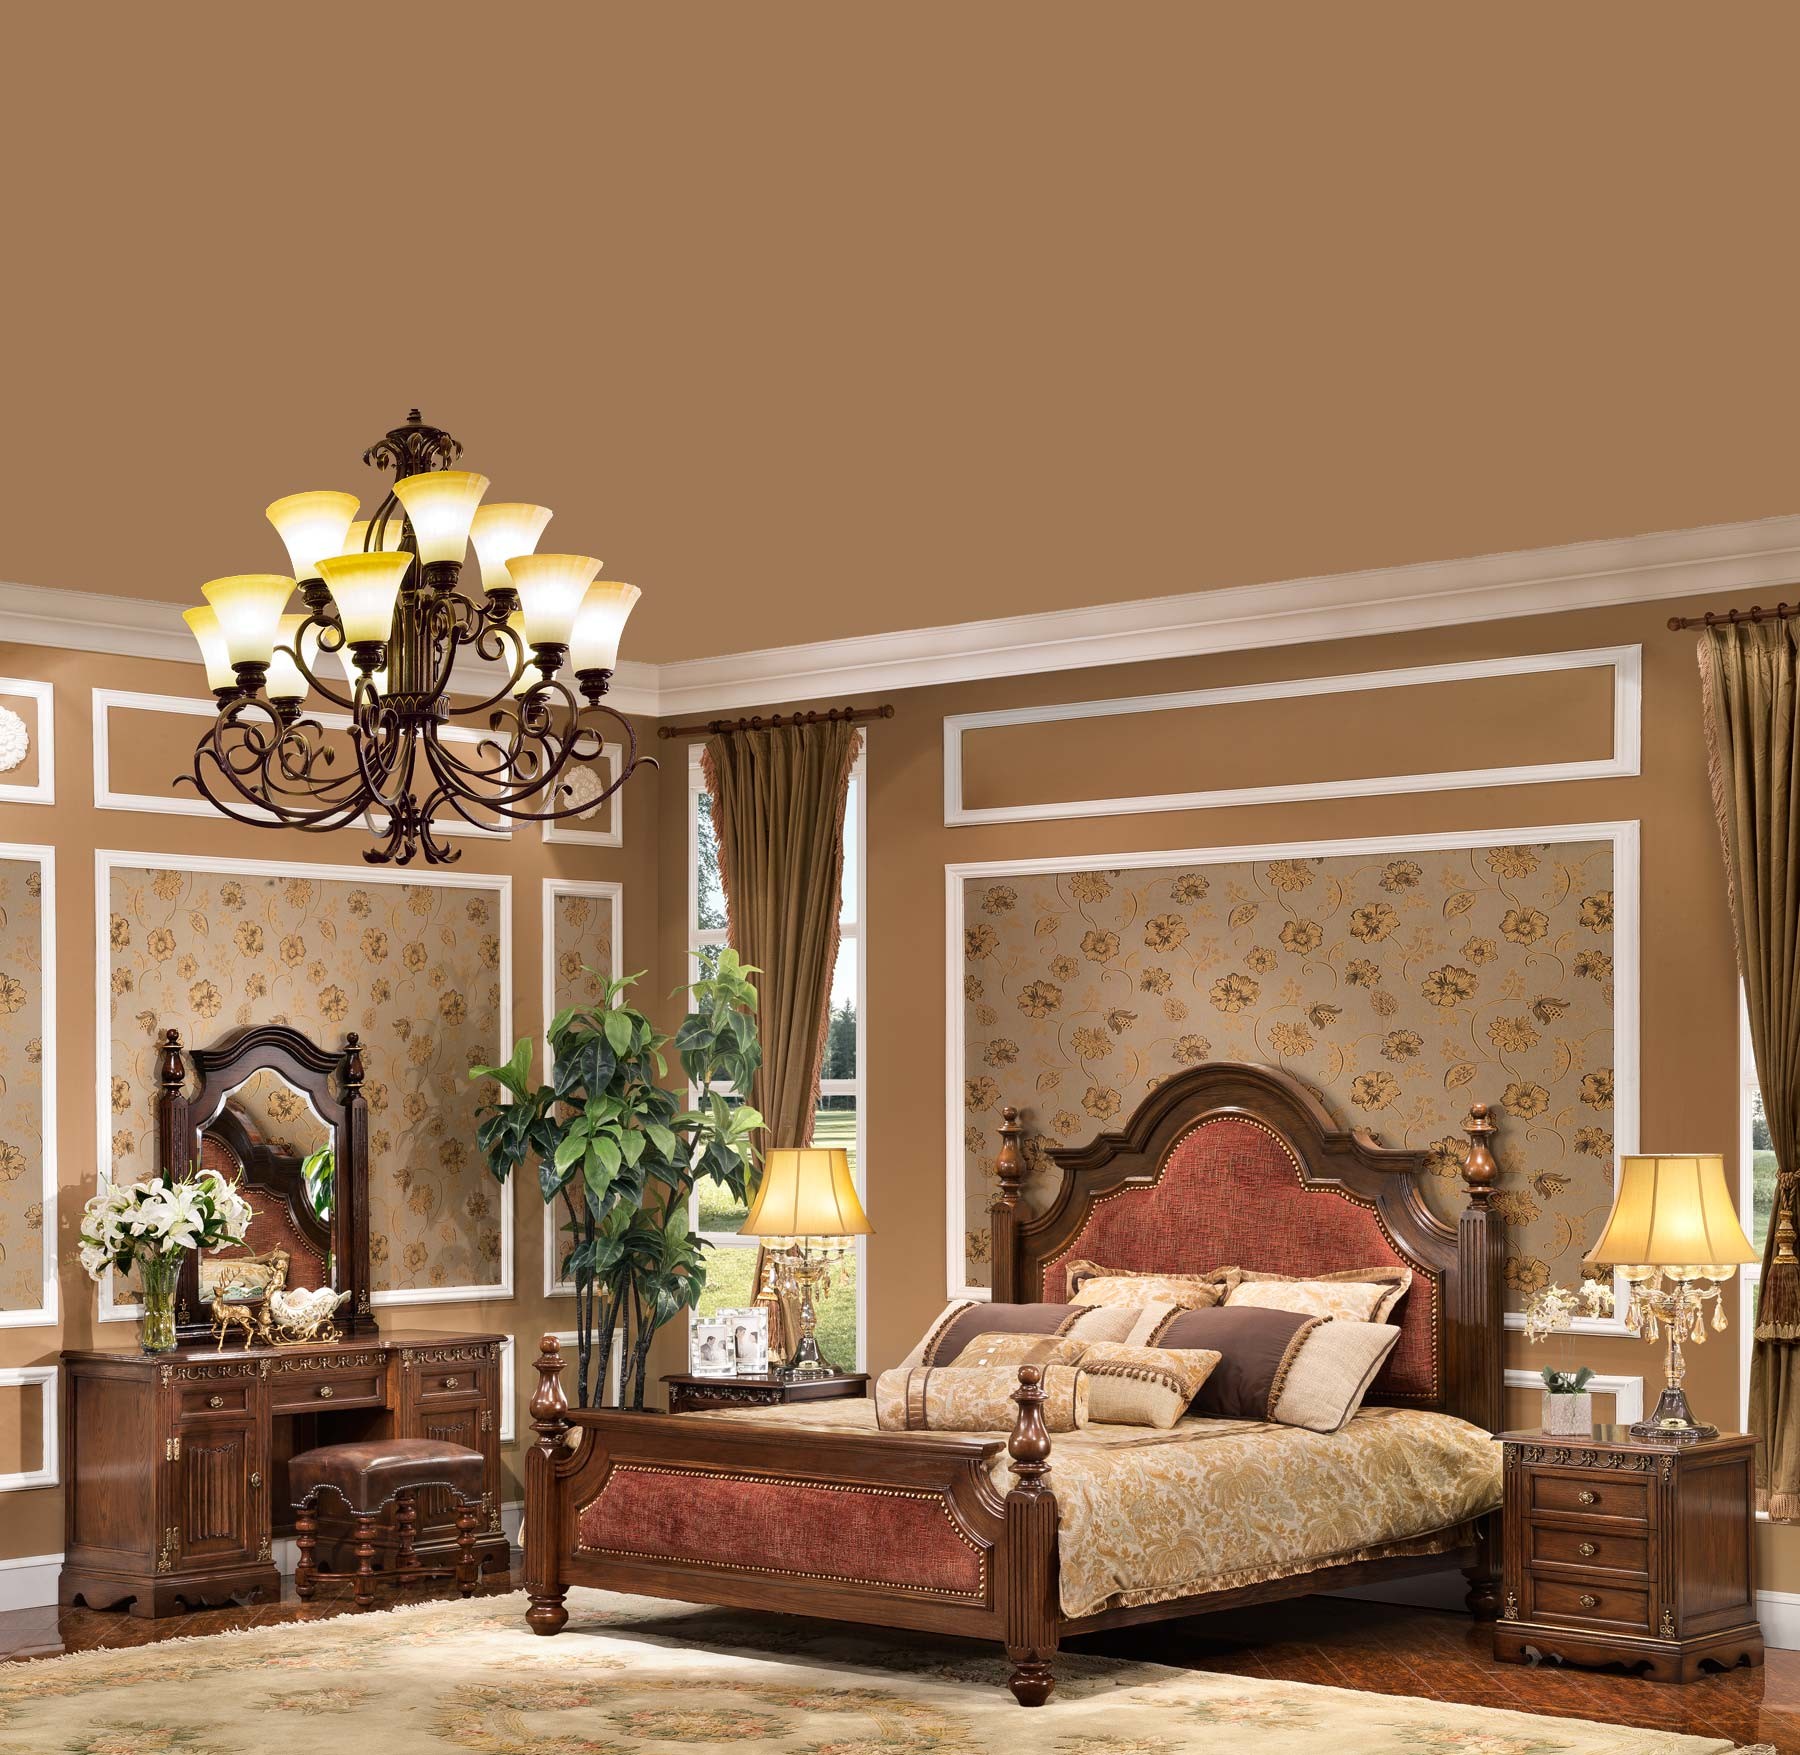 Grosvenor 5-pc Bedroom Set shown in Antique Cocoa finish